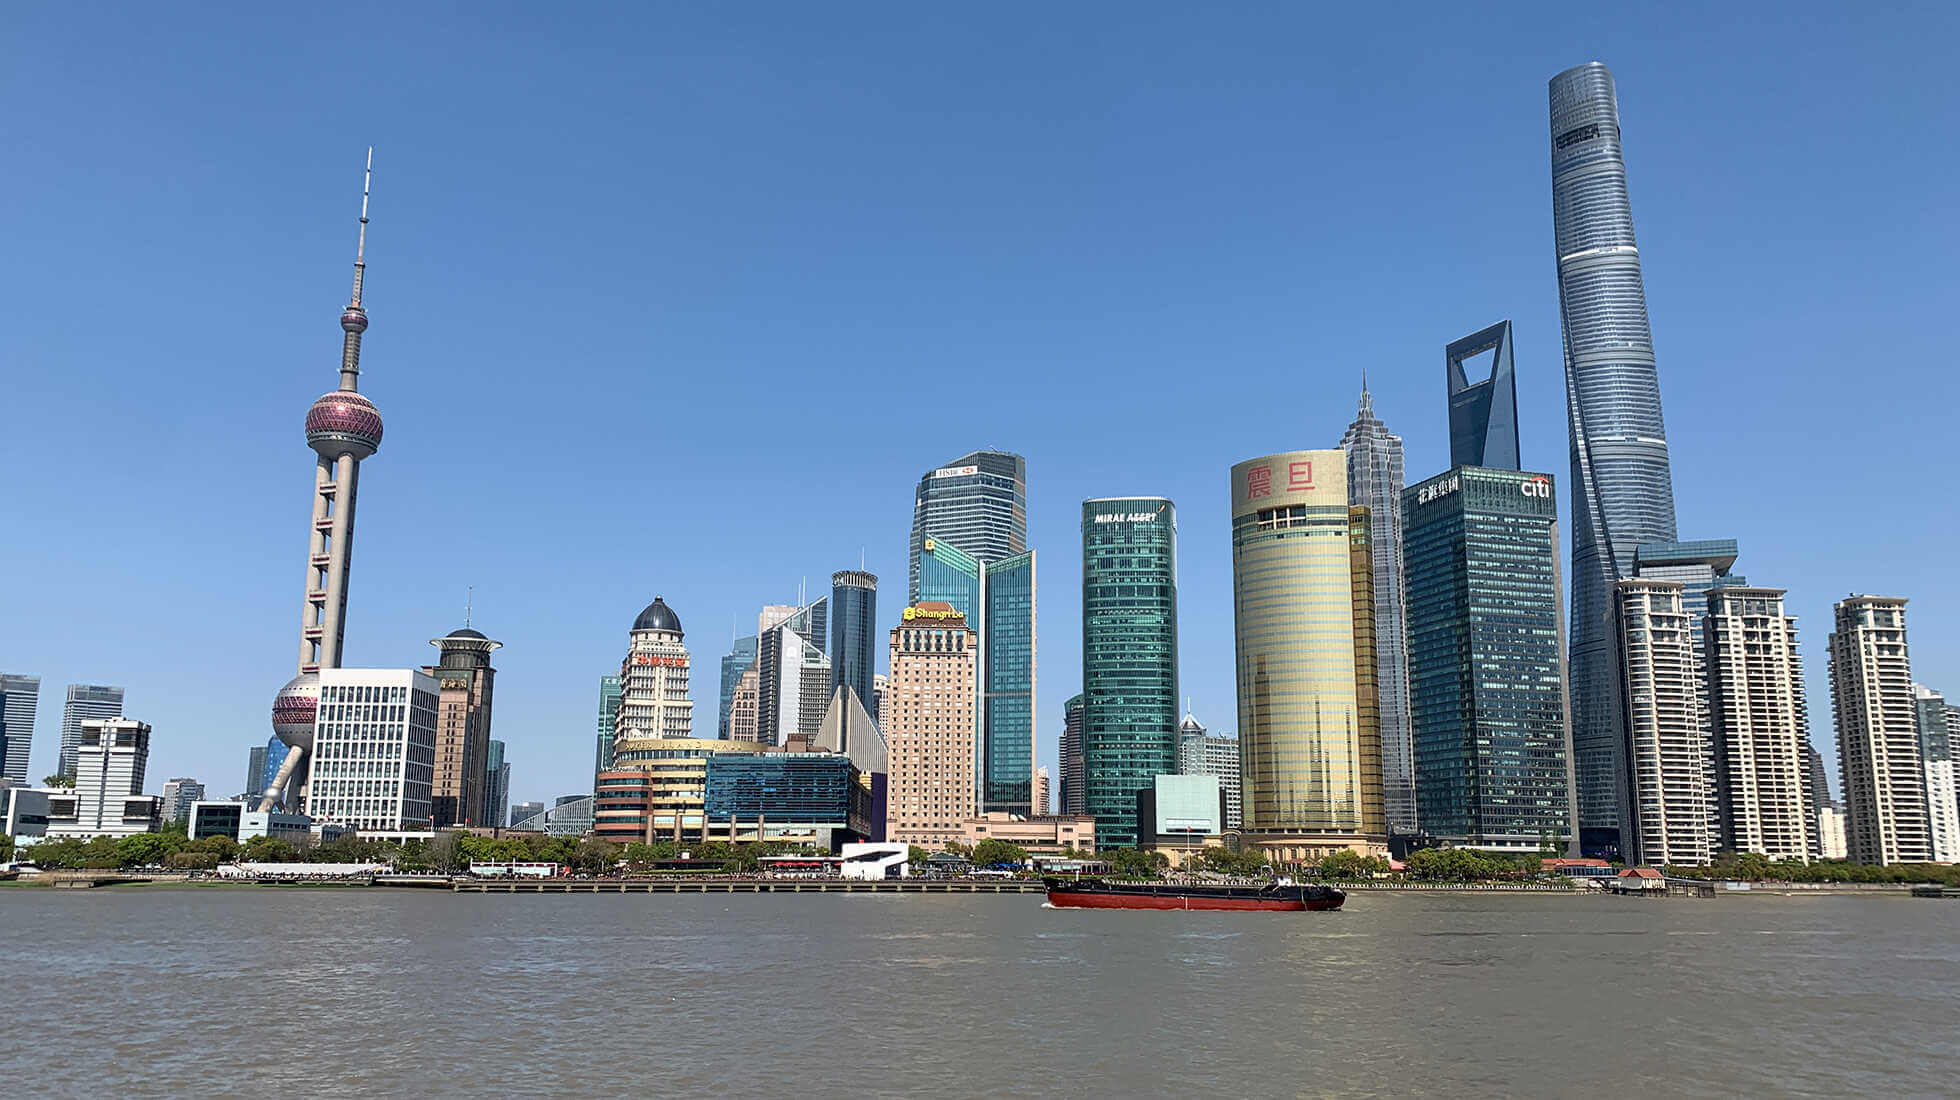 City scenery of Shanghai